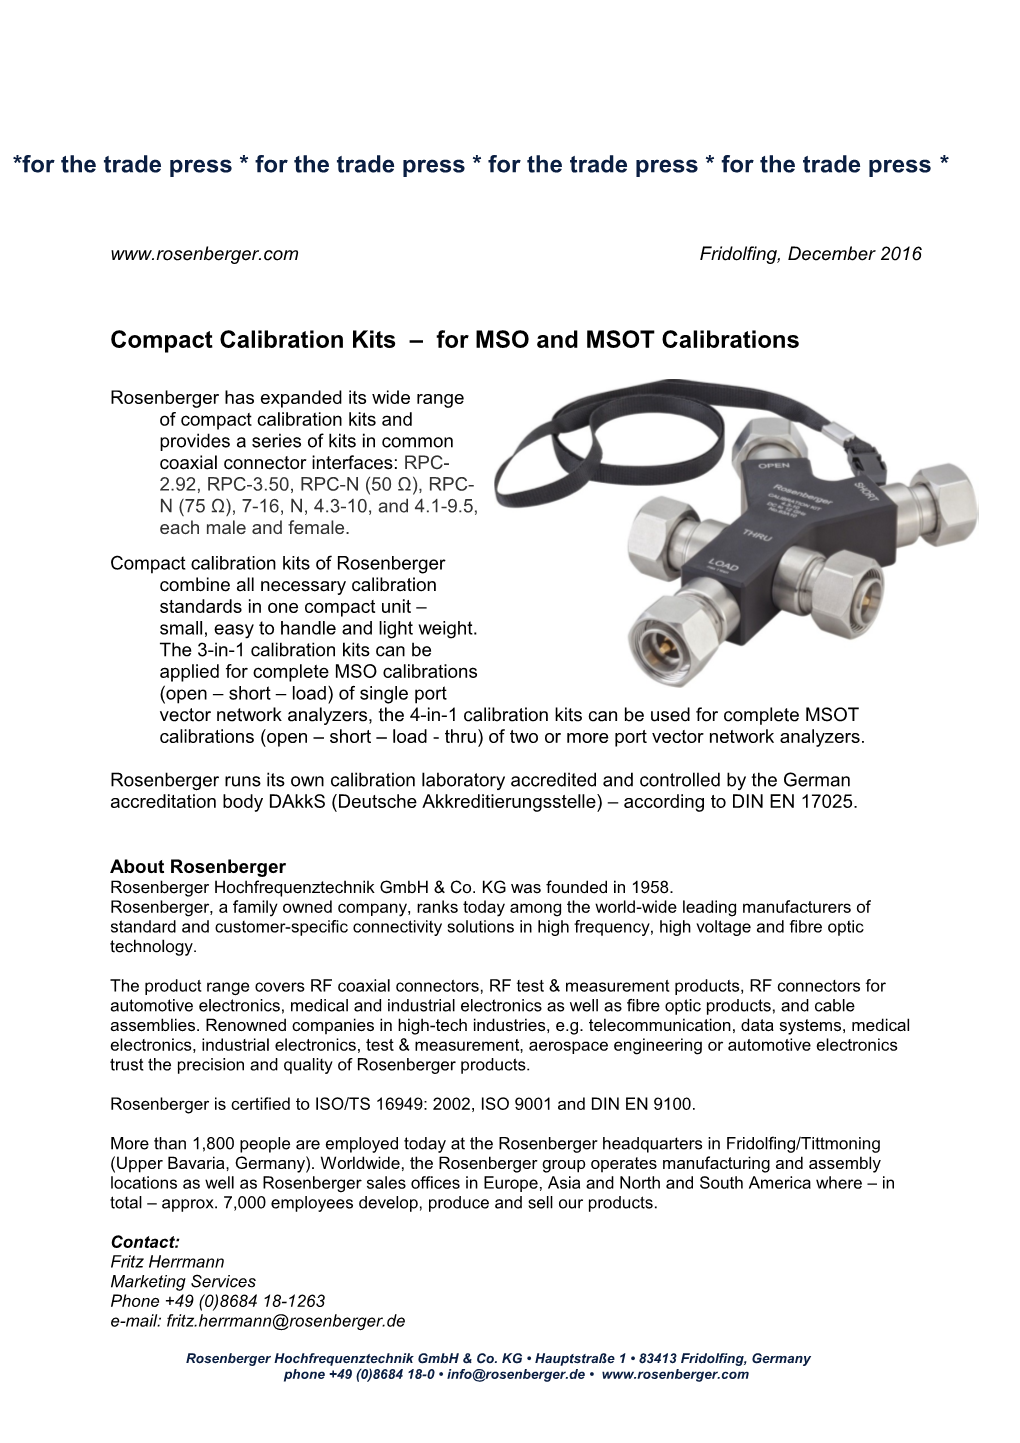 Compact Calibration Kits for MSO and MSOT Calibrations